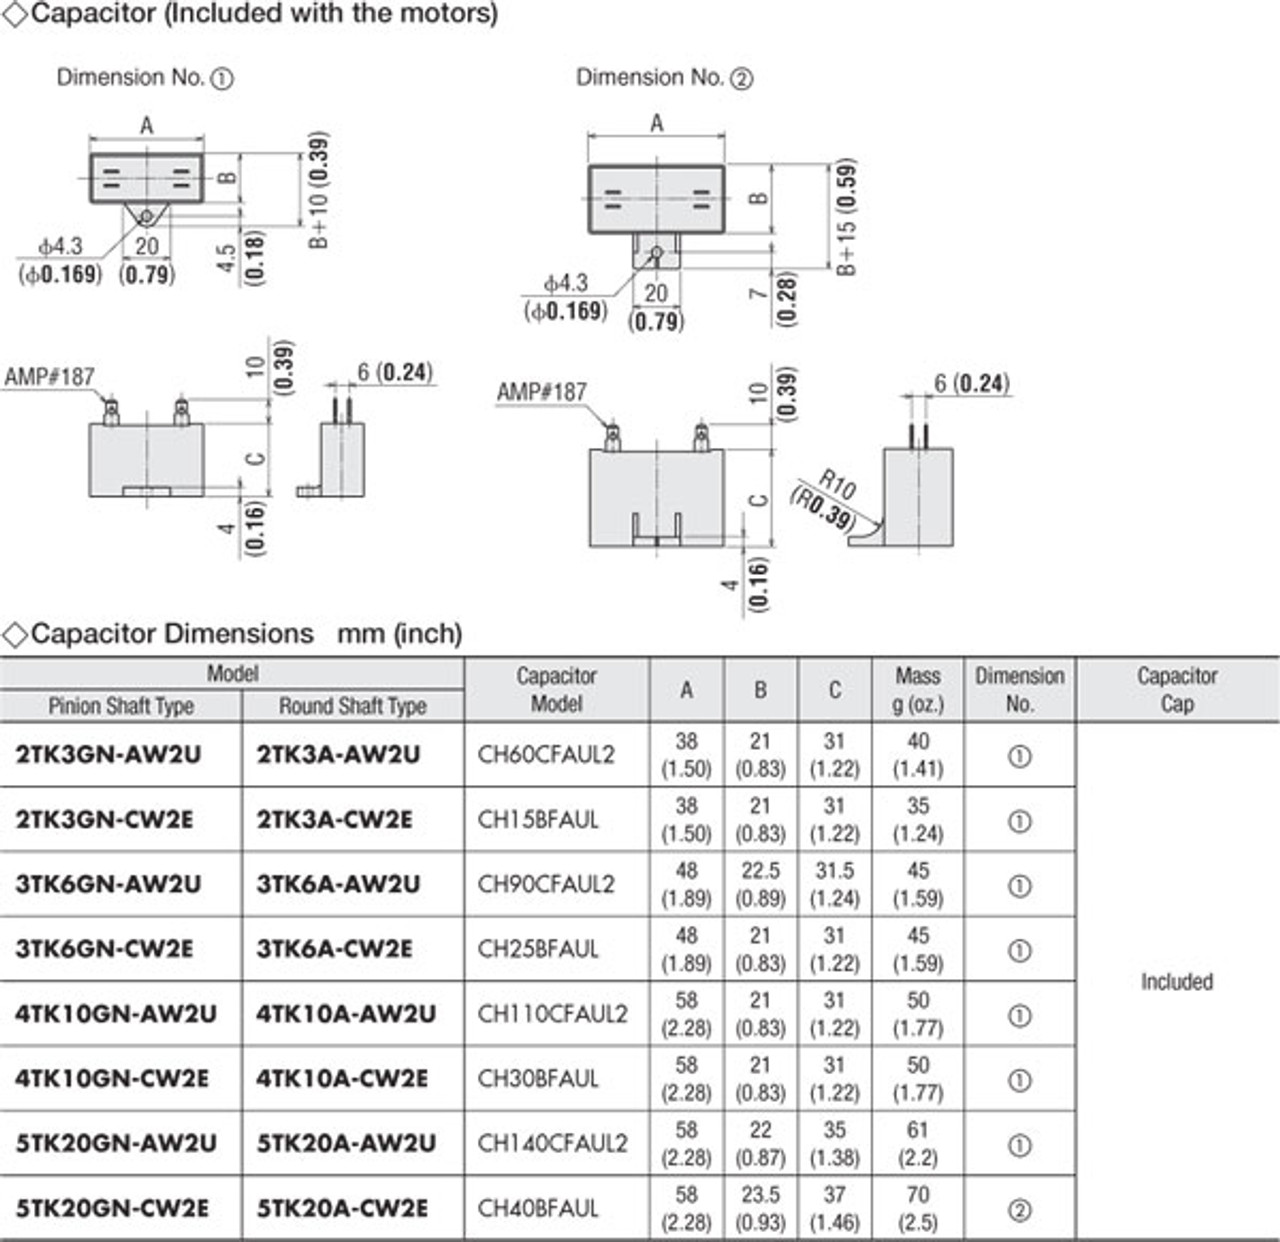 4TK10GN-CW2E / 4GN12.5KA - Capacitor